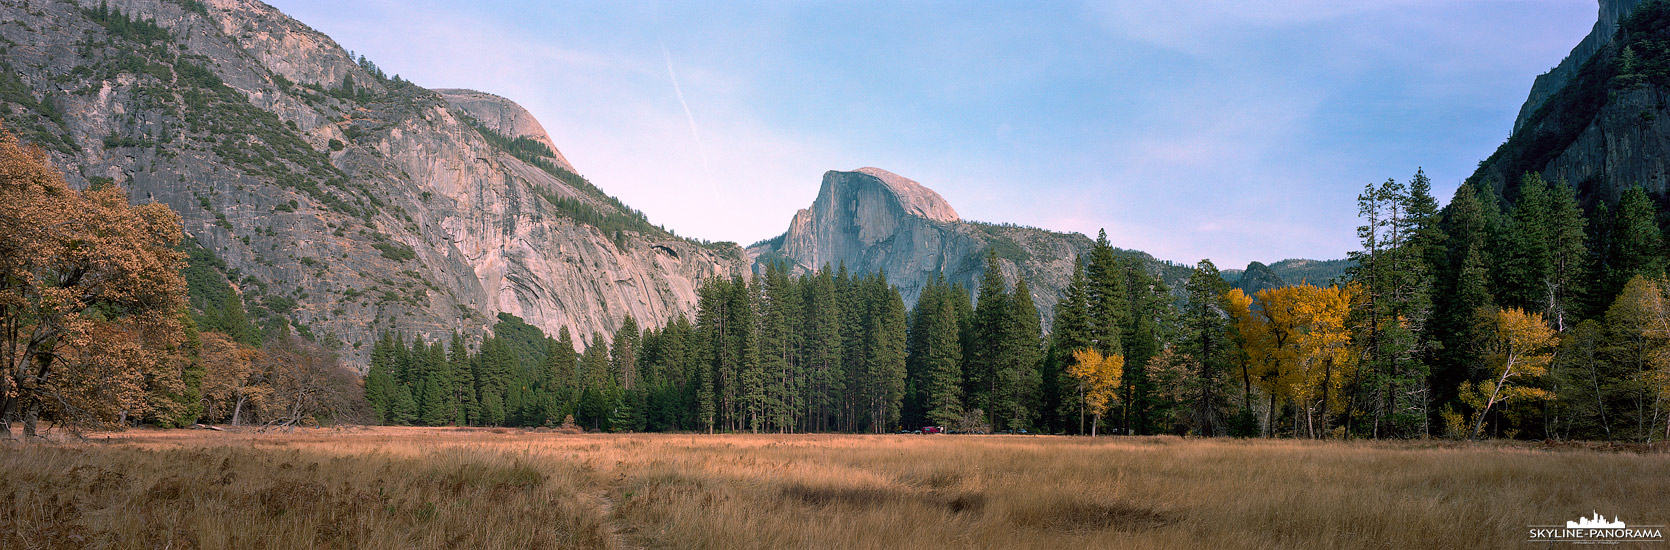 Yosemite Valley - Fall Colors (p_01180)